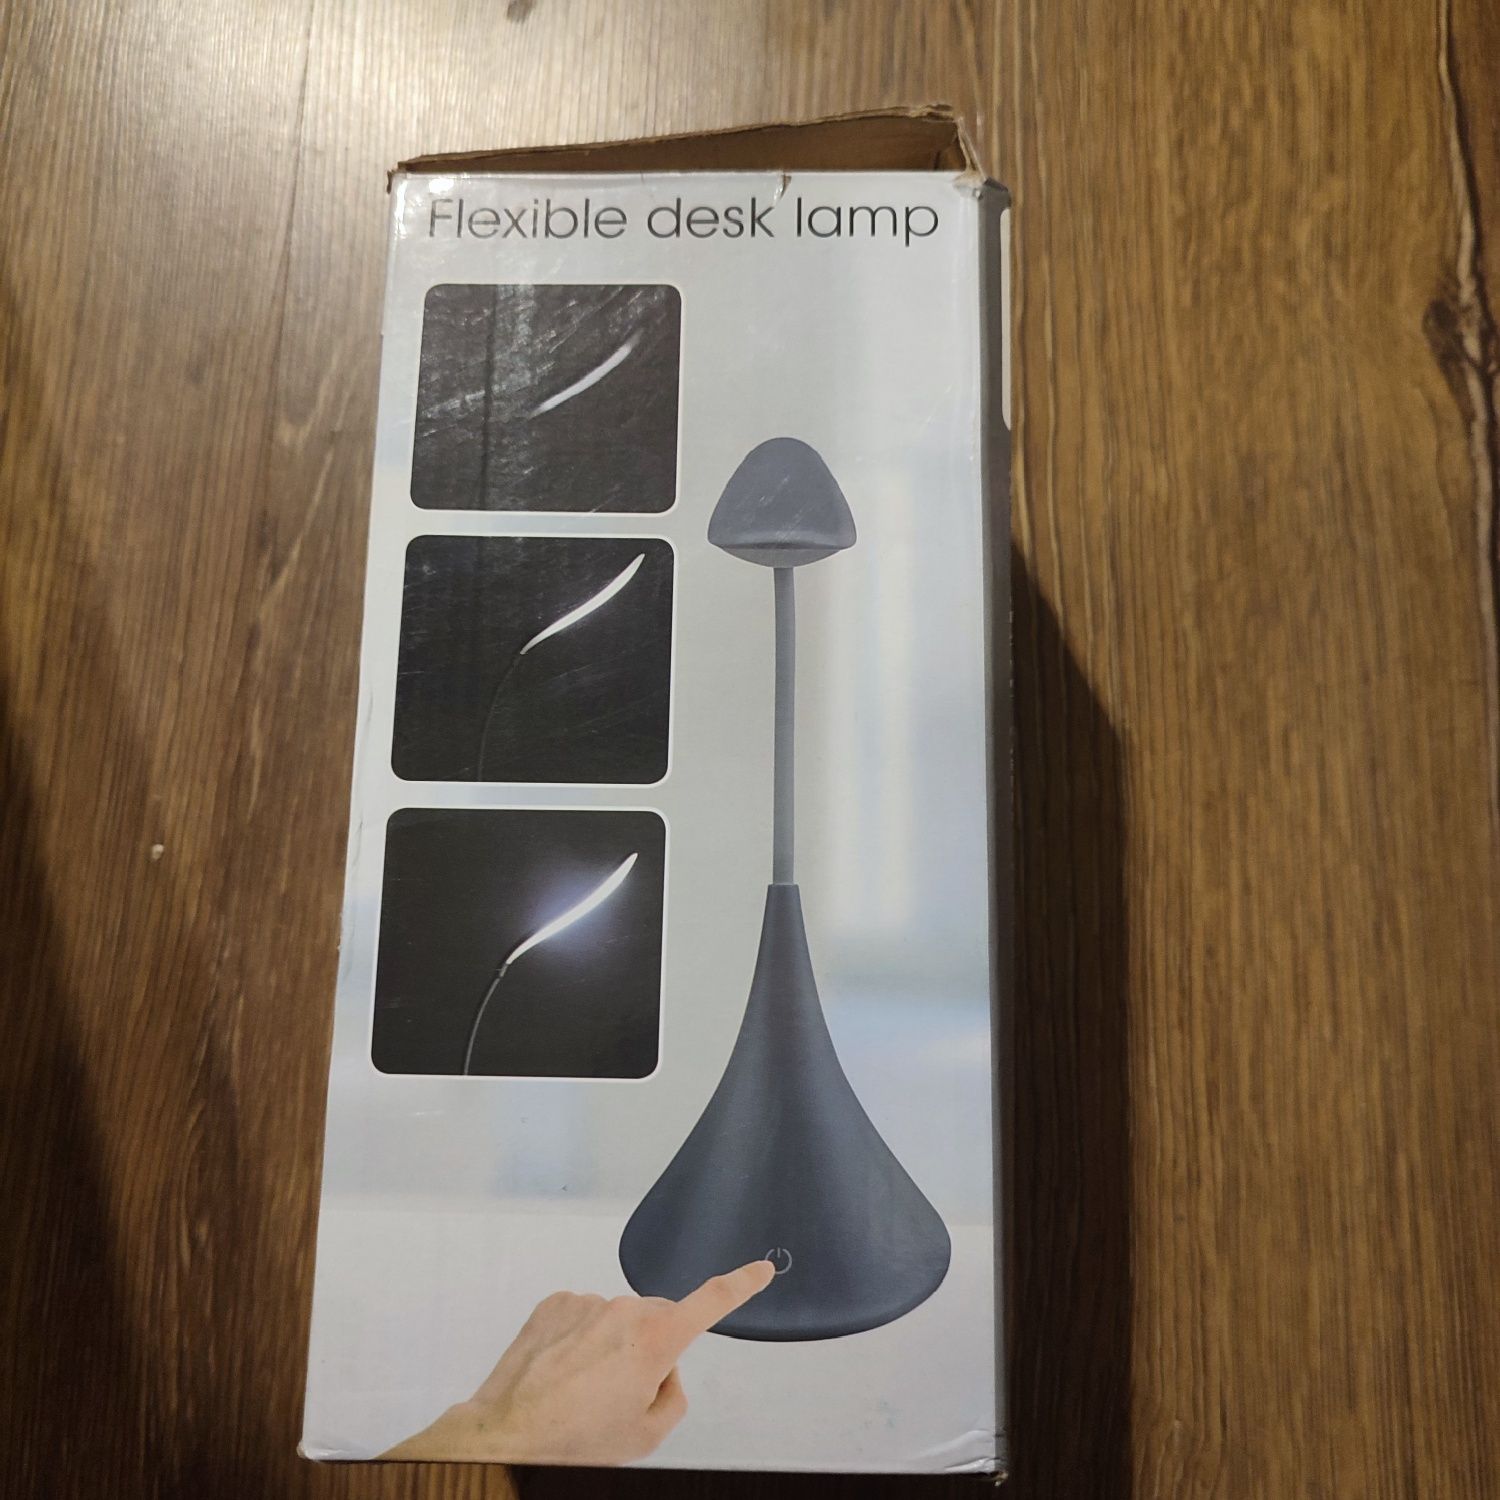 Nowa, elastyczna lampka